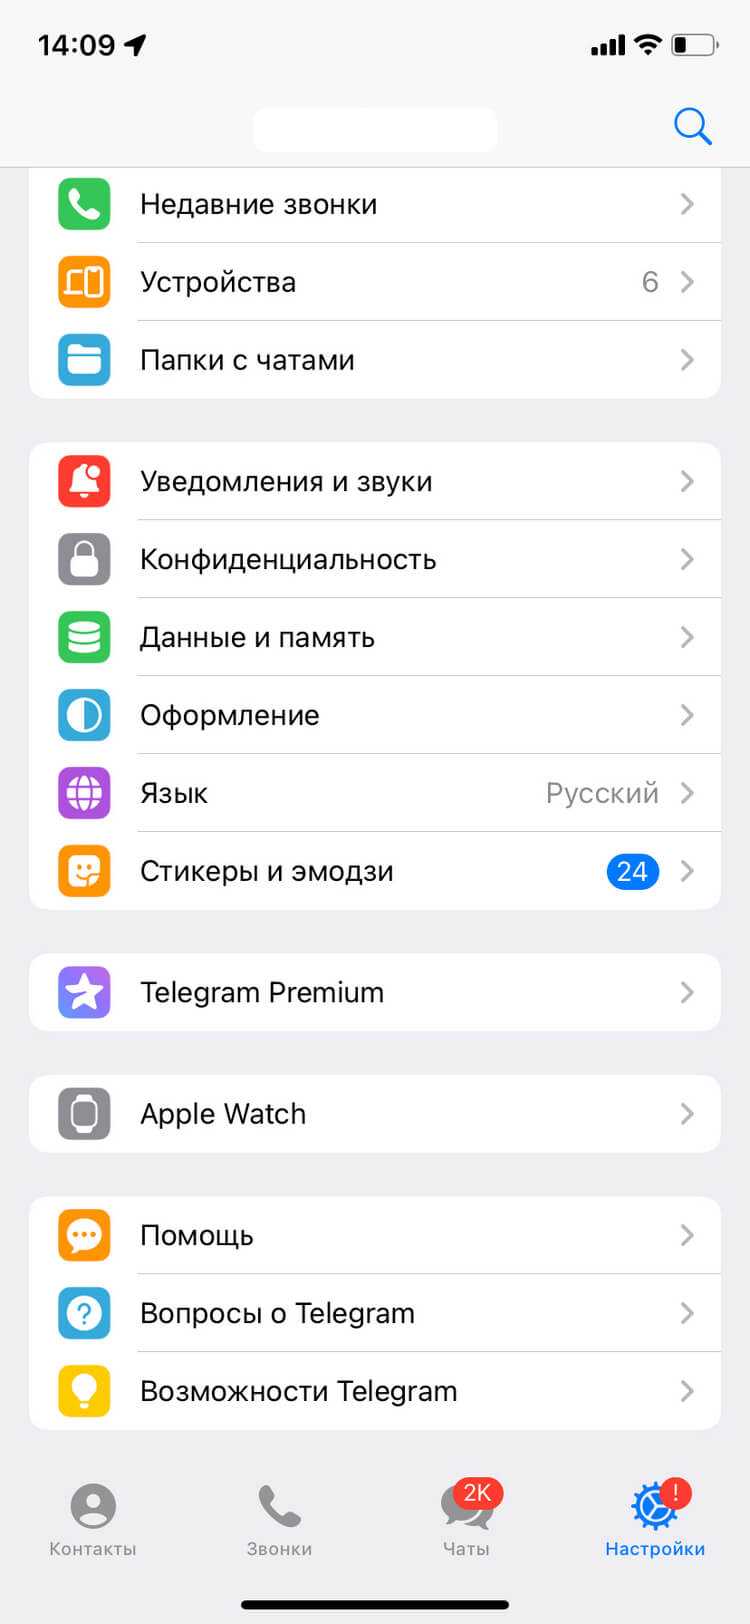 Подписка на каналы в Telegram с iPhone